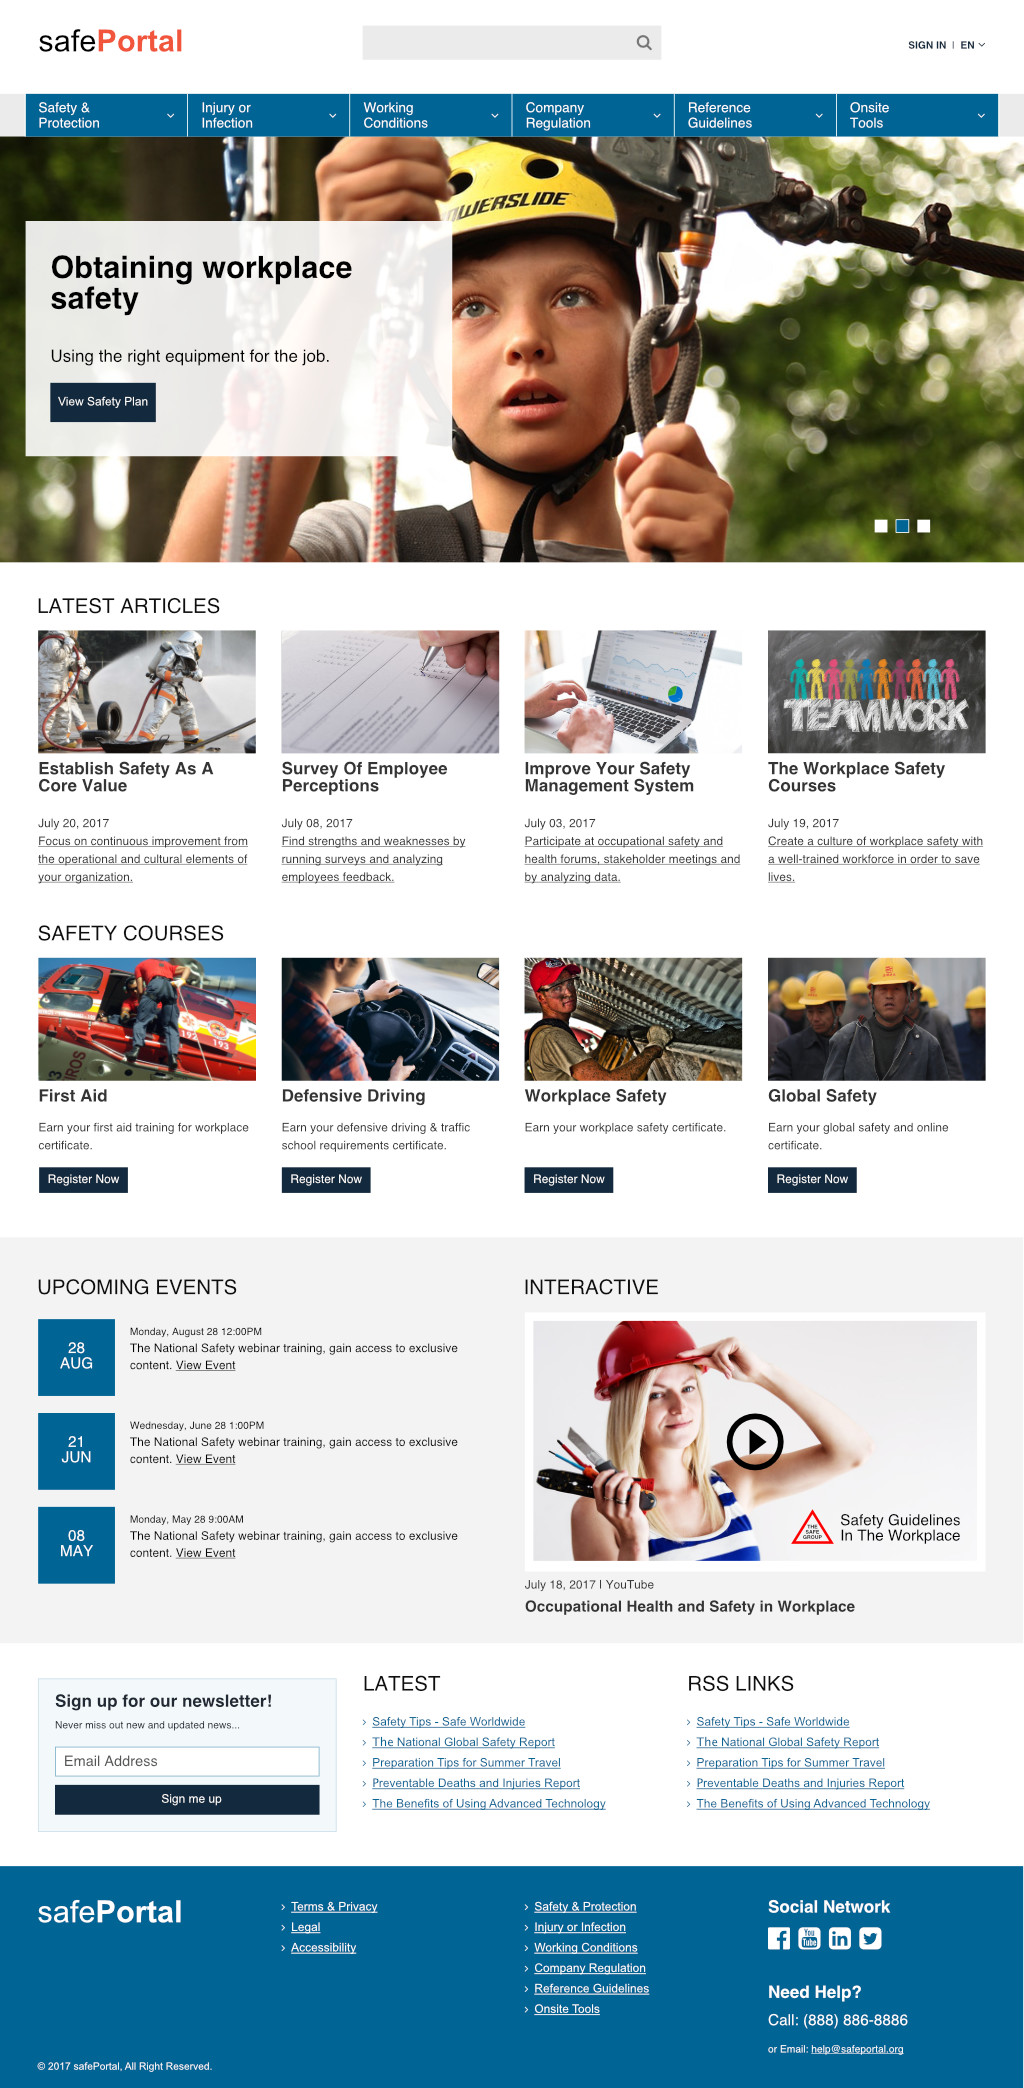 Image of SafePortal home page design.